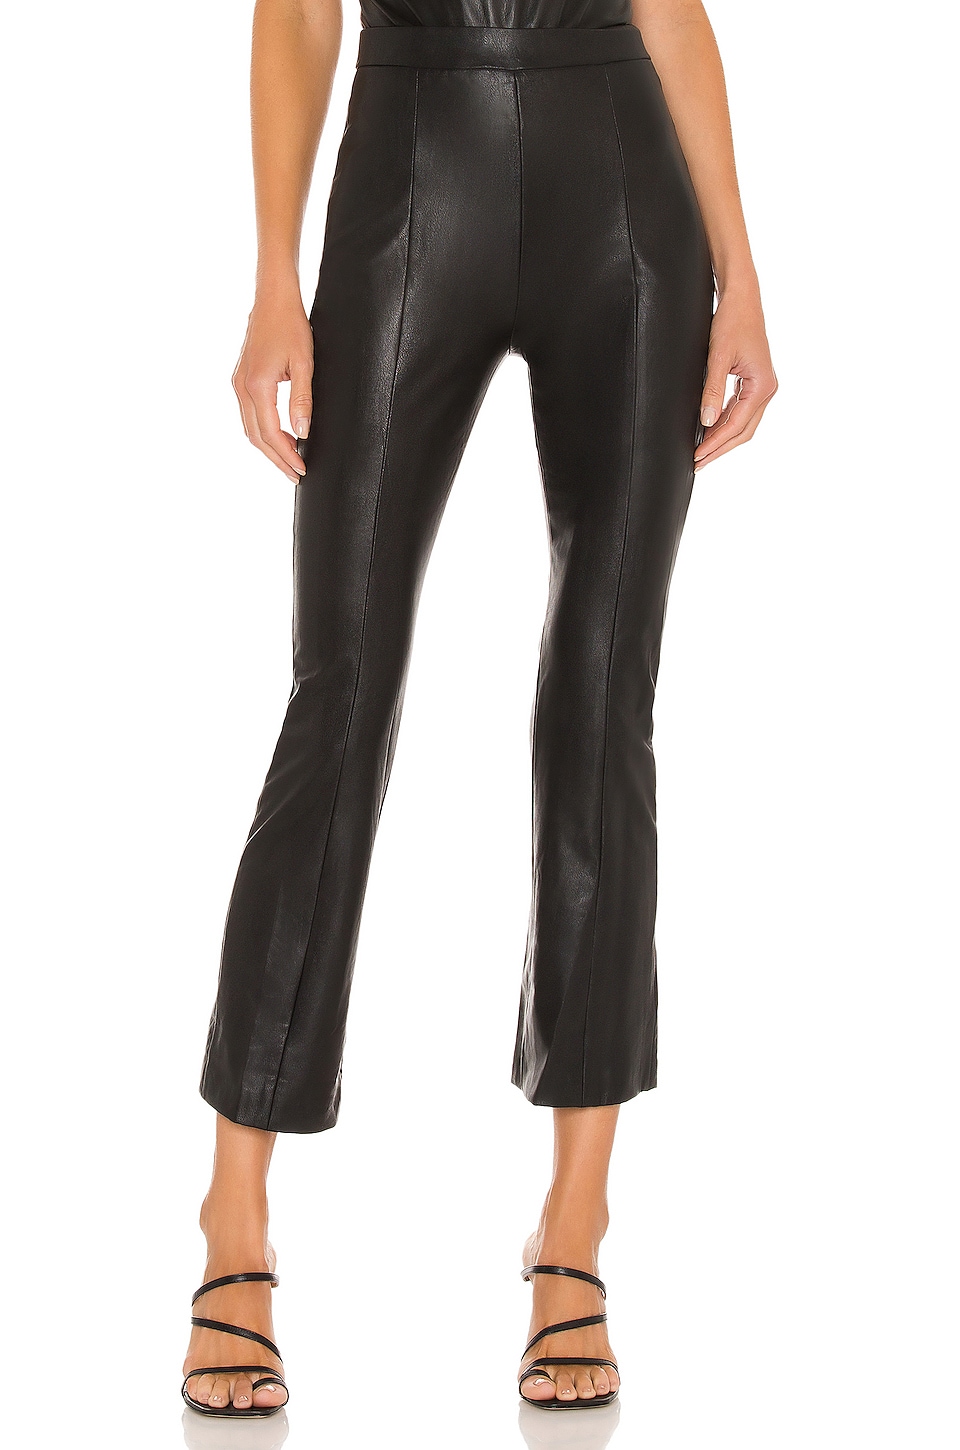 Amanda Uprichard x REVOLVE Lorna Leather Pants in Cream Leather | REVOLVE